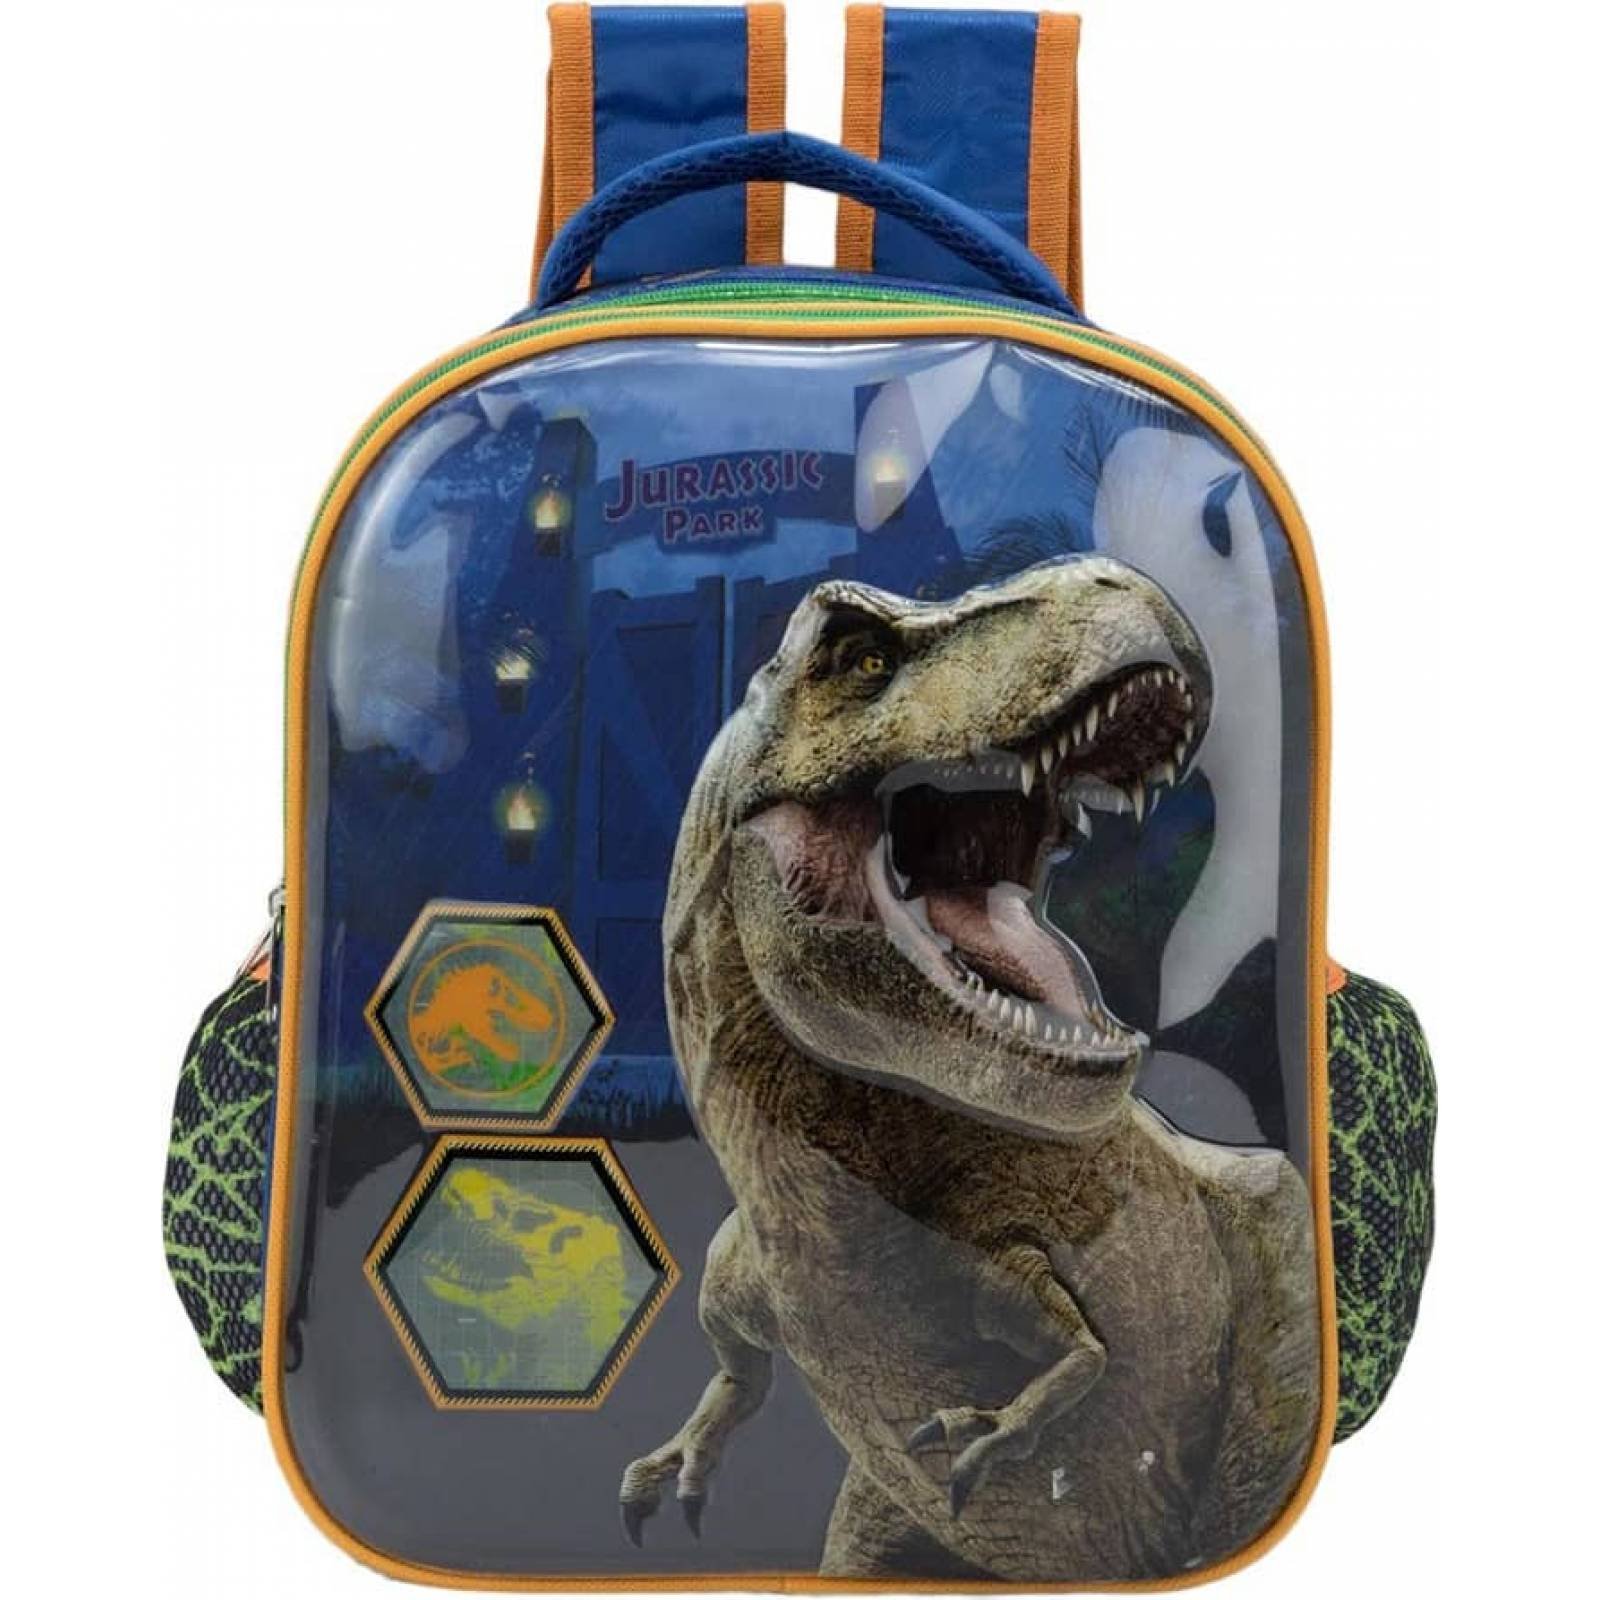 Backpack mochila/morral/maleta niño azul Jurassic World modelo 5220